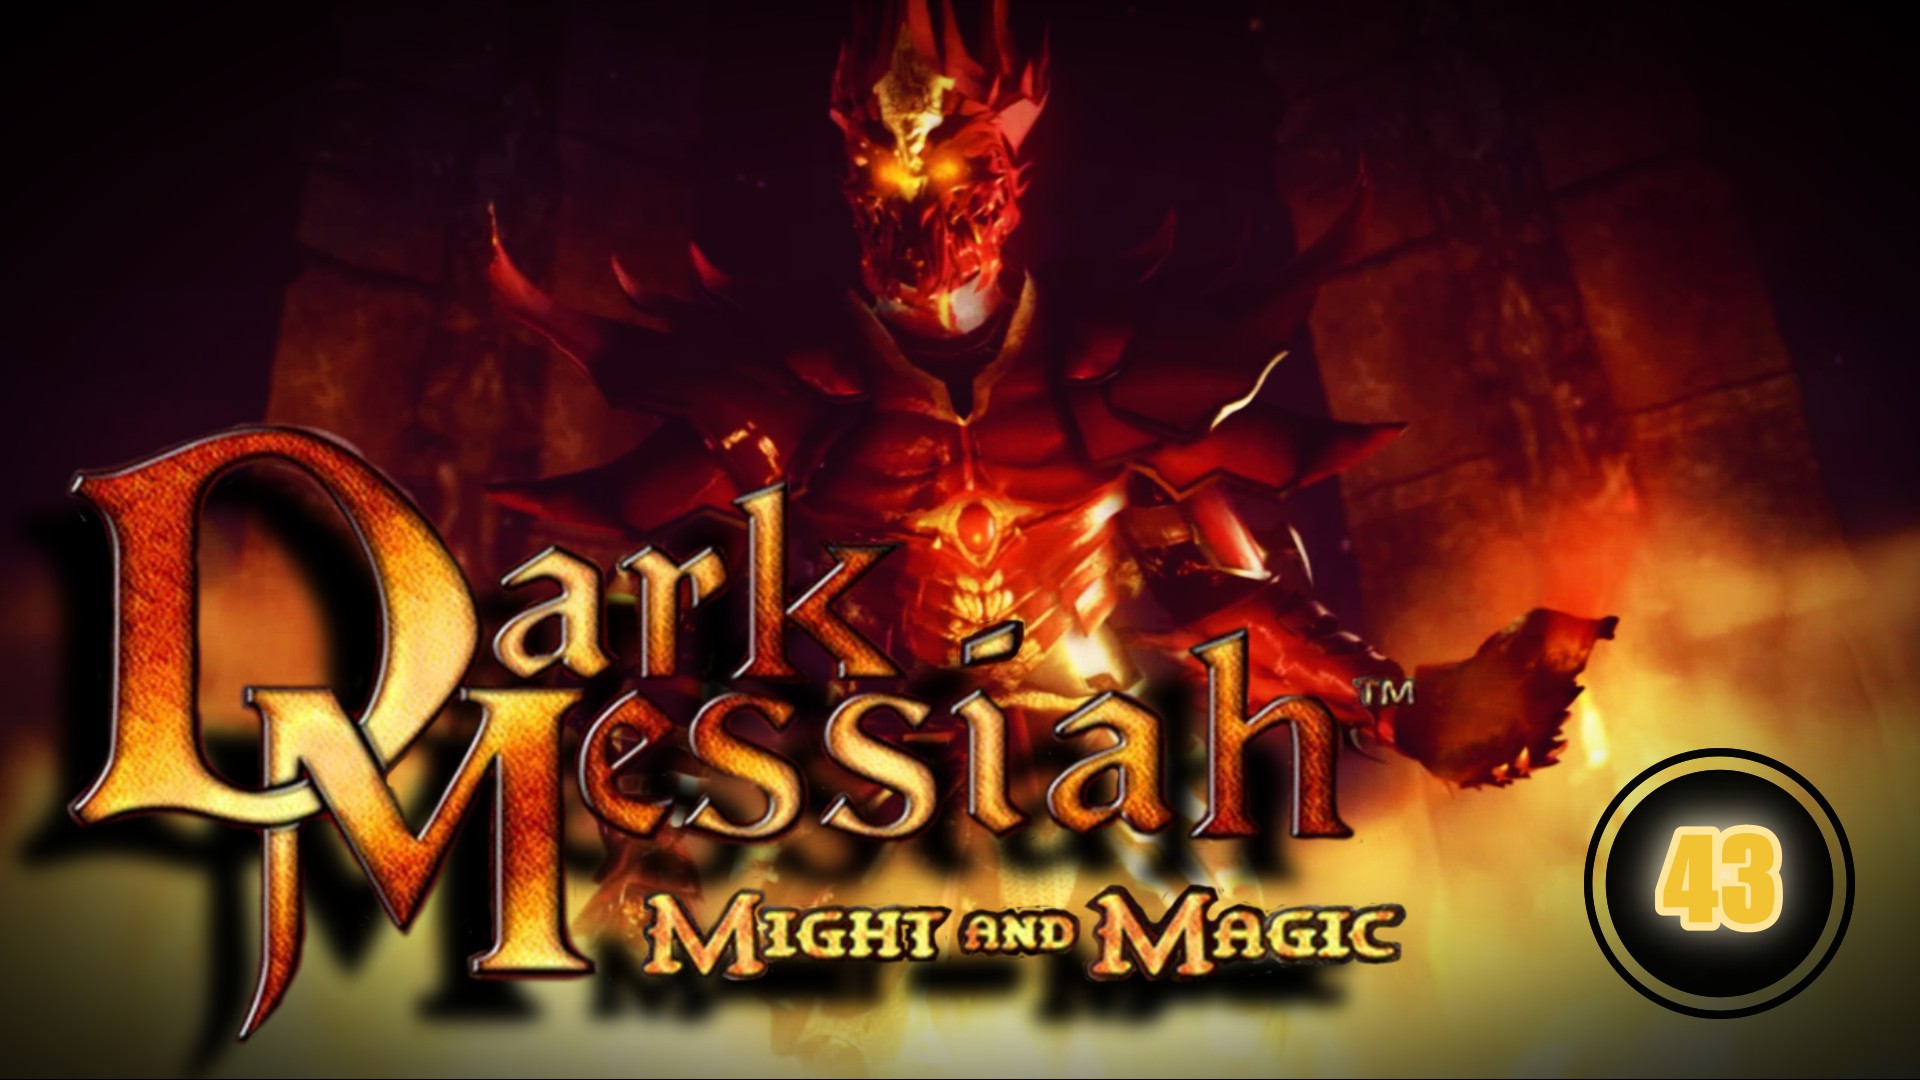 Dark Messiah of Might and Magic 43